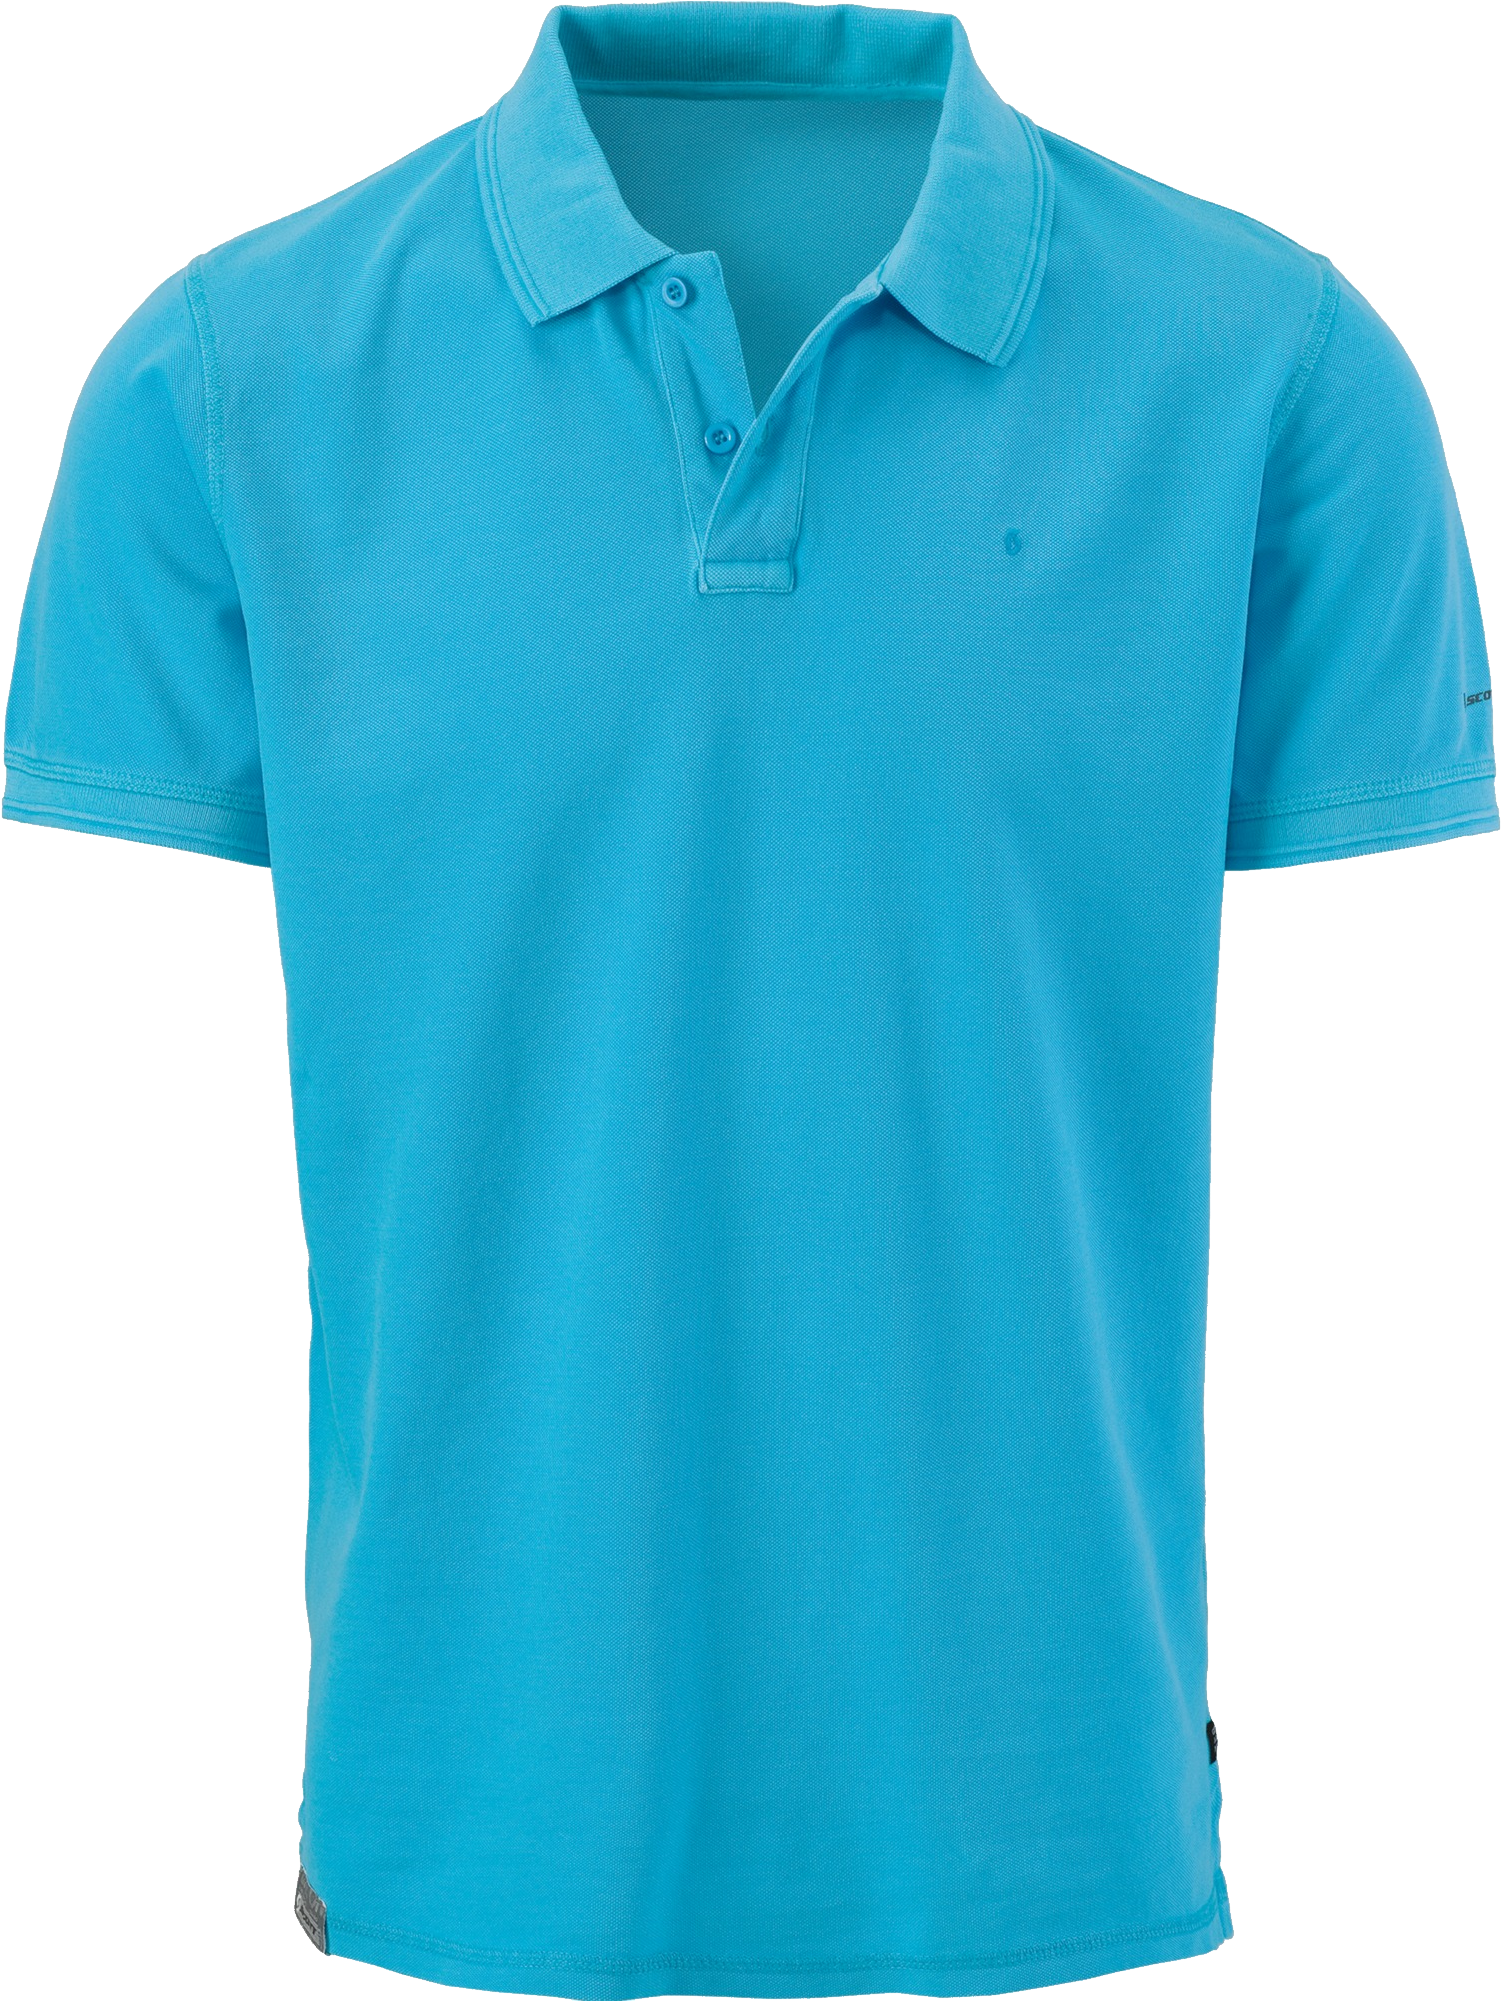 Polo Shirt Png Image - Swim Shirt Clipart (1568x2000), Png Download